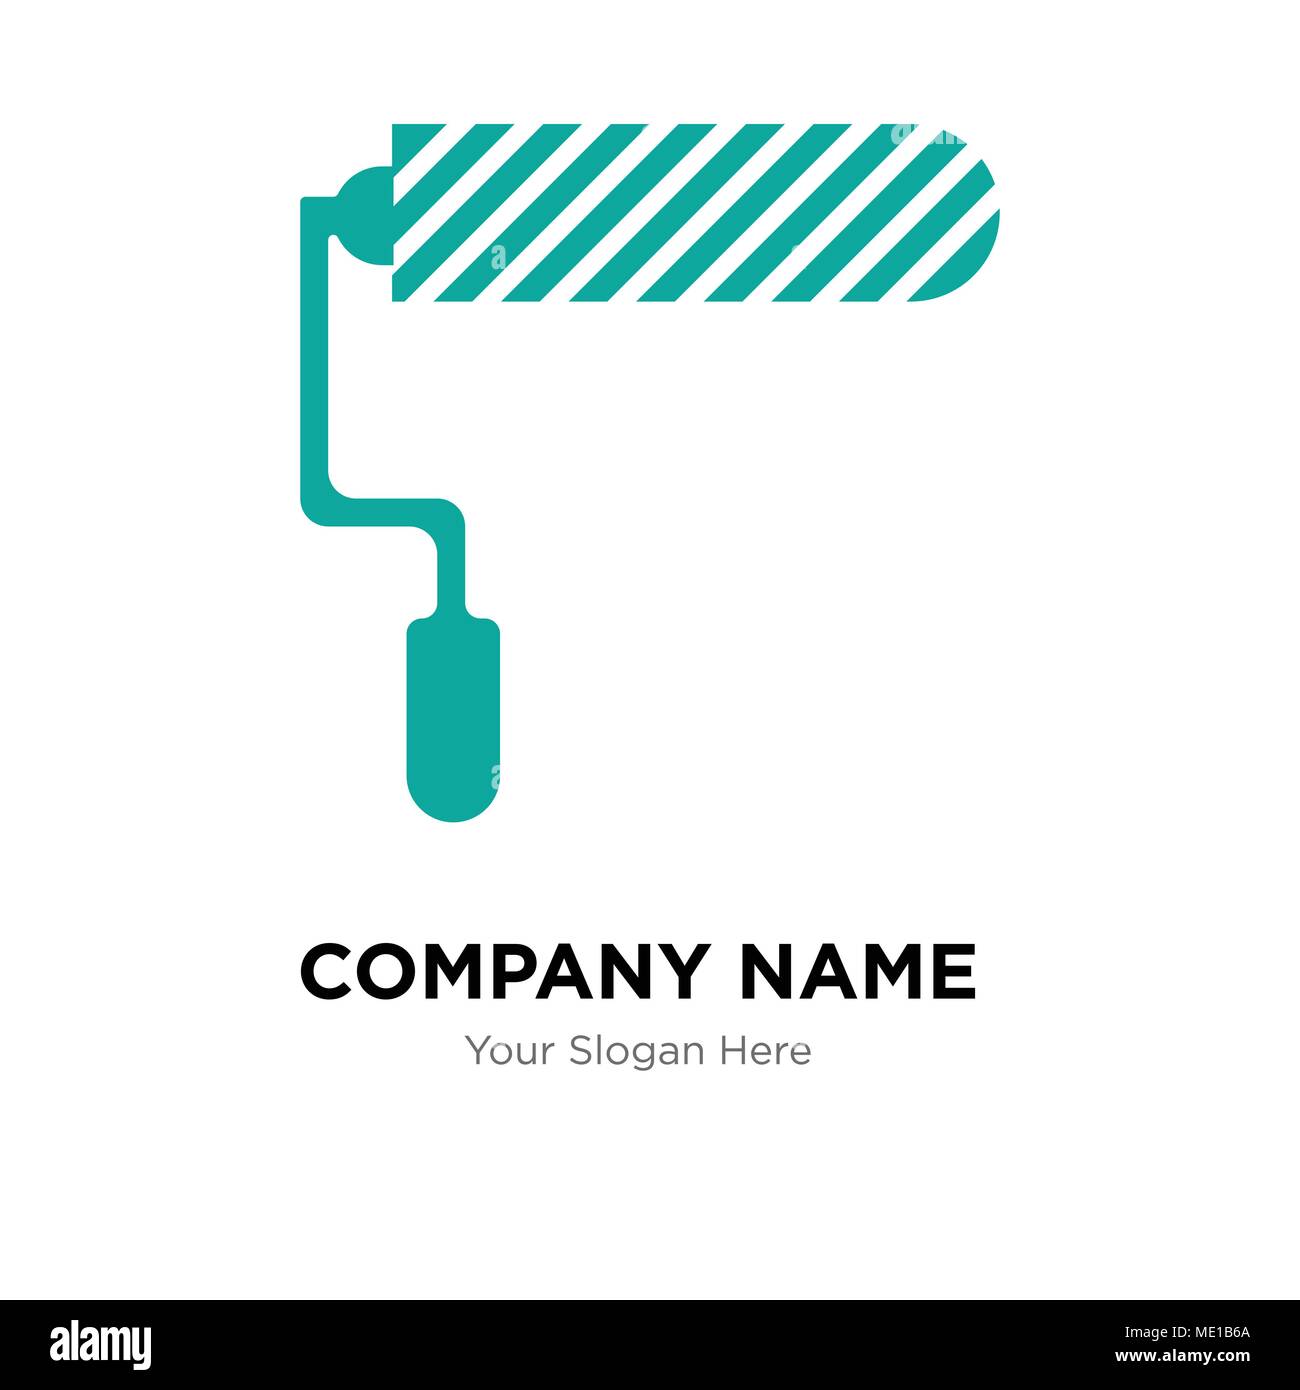 roller company logo design template, Business corporate vector icon Stock Vector